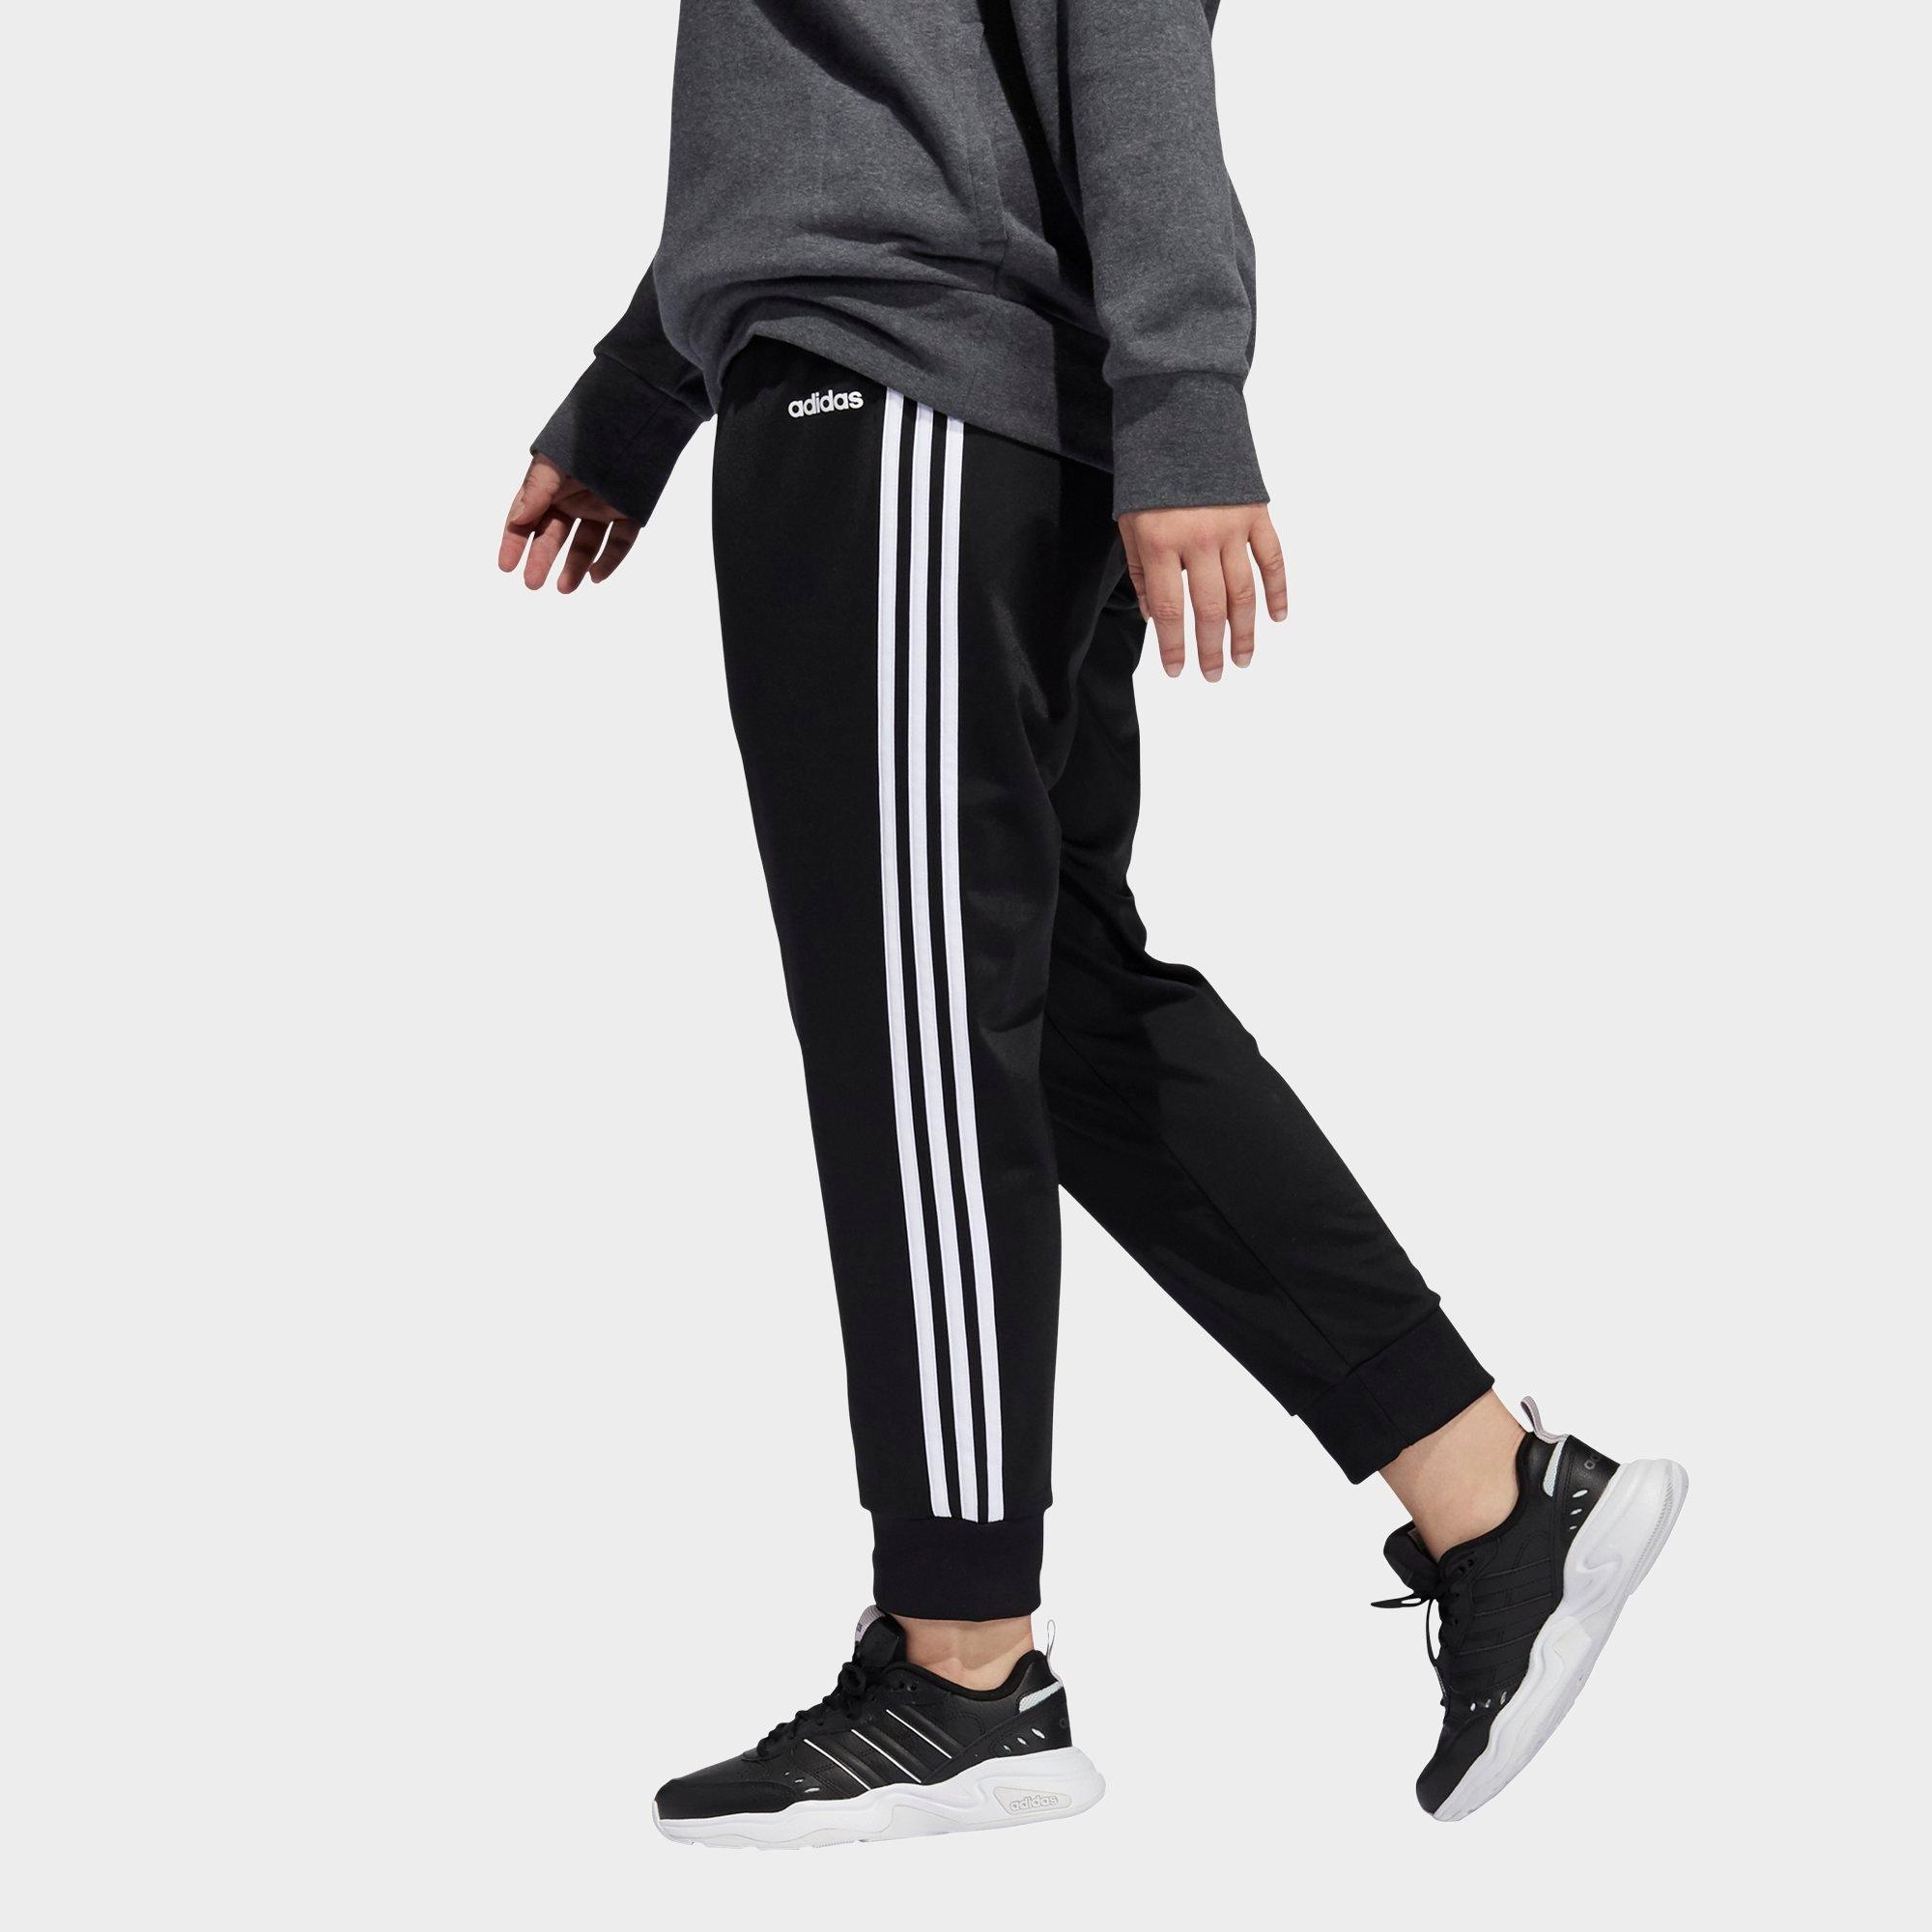 adidas track pants womens plus size